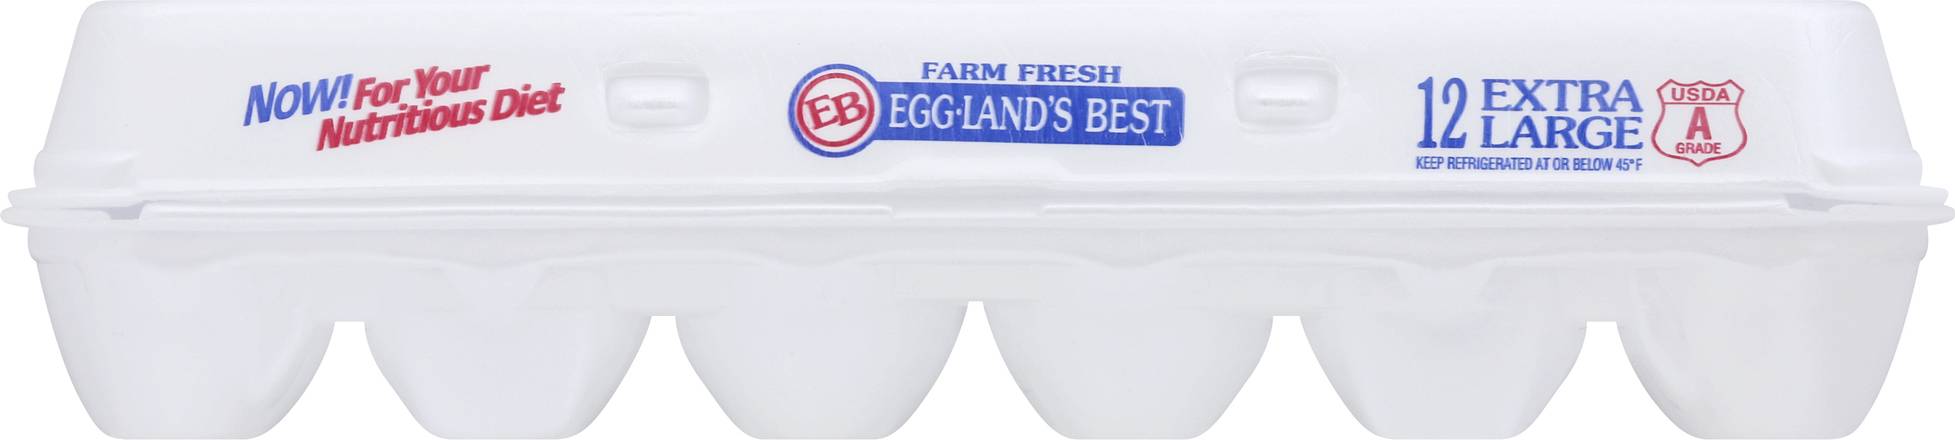 Eggland's Best Eggs (xl)